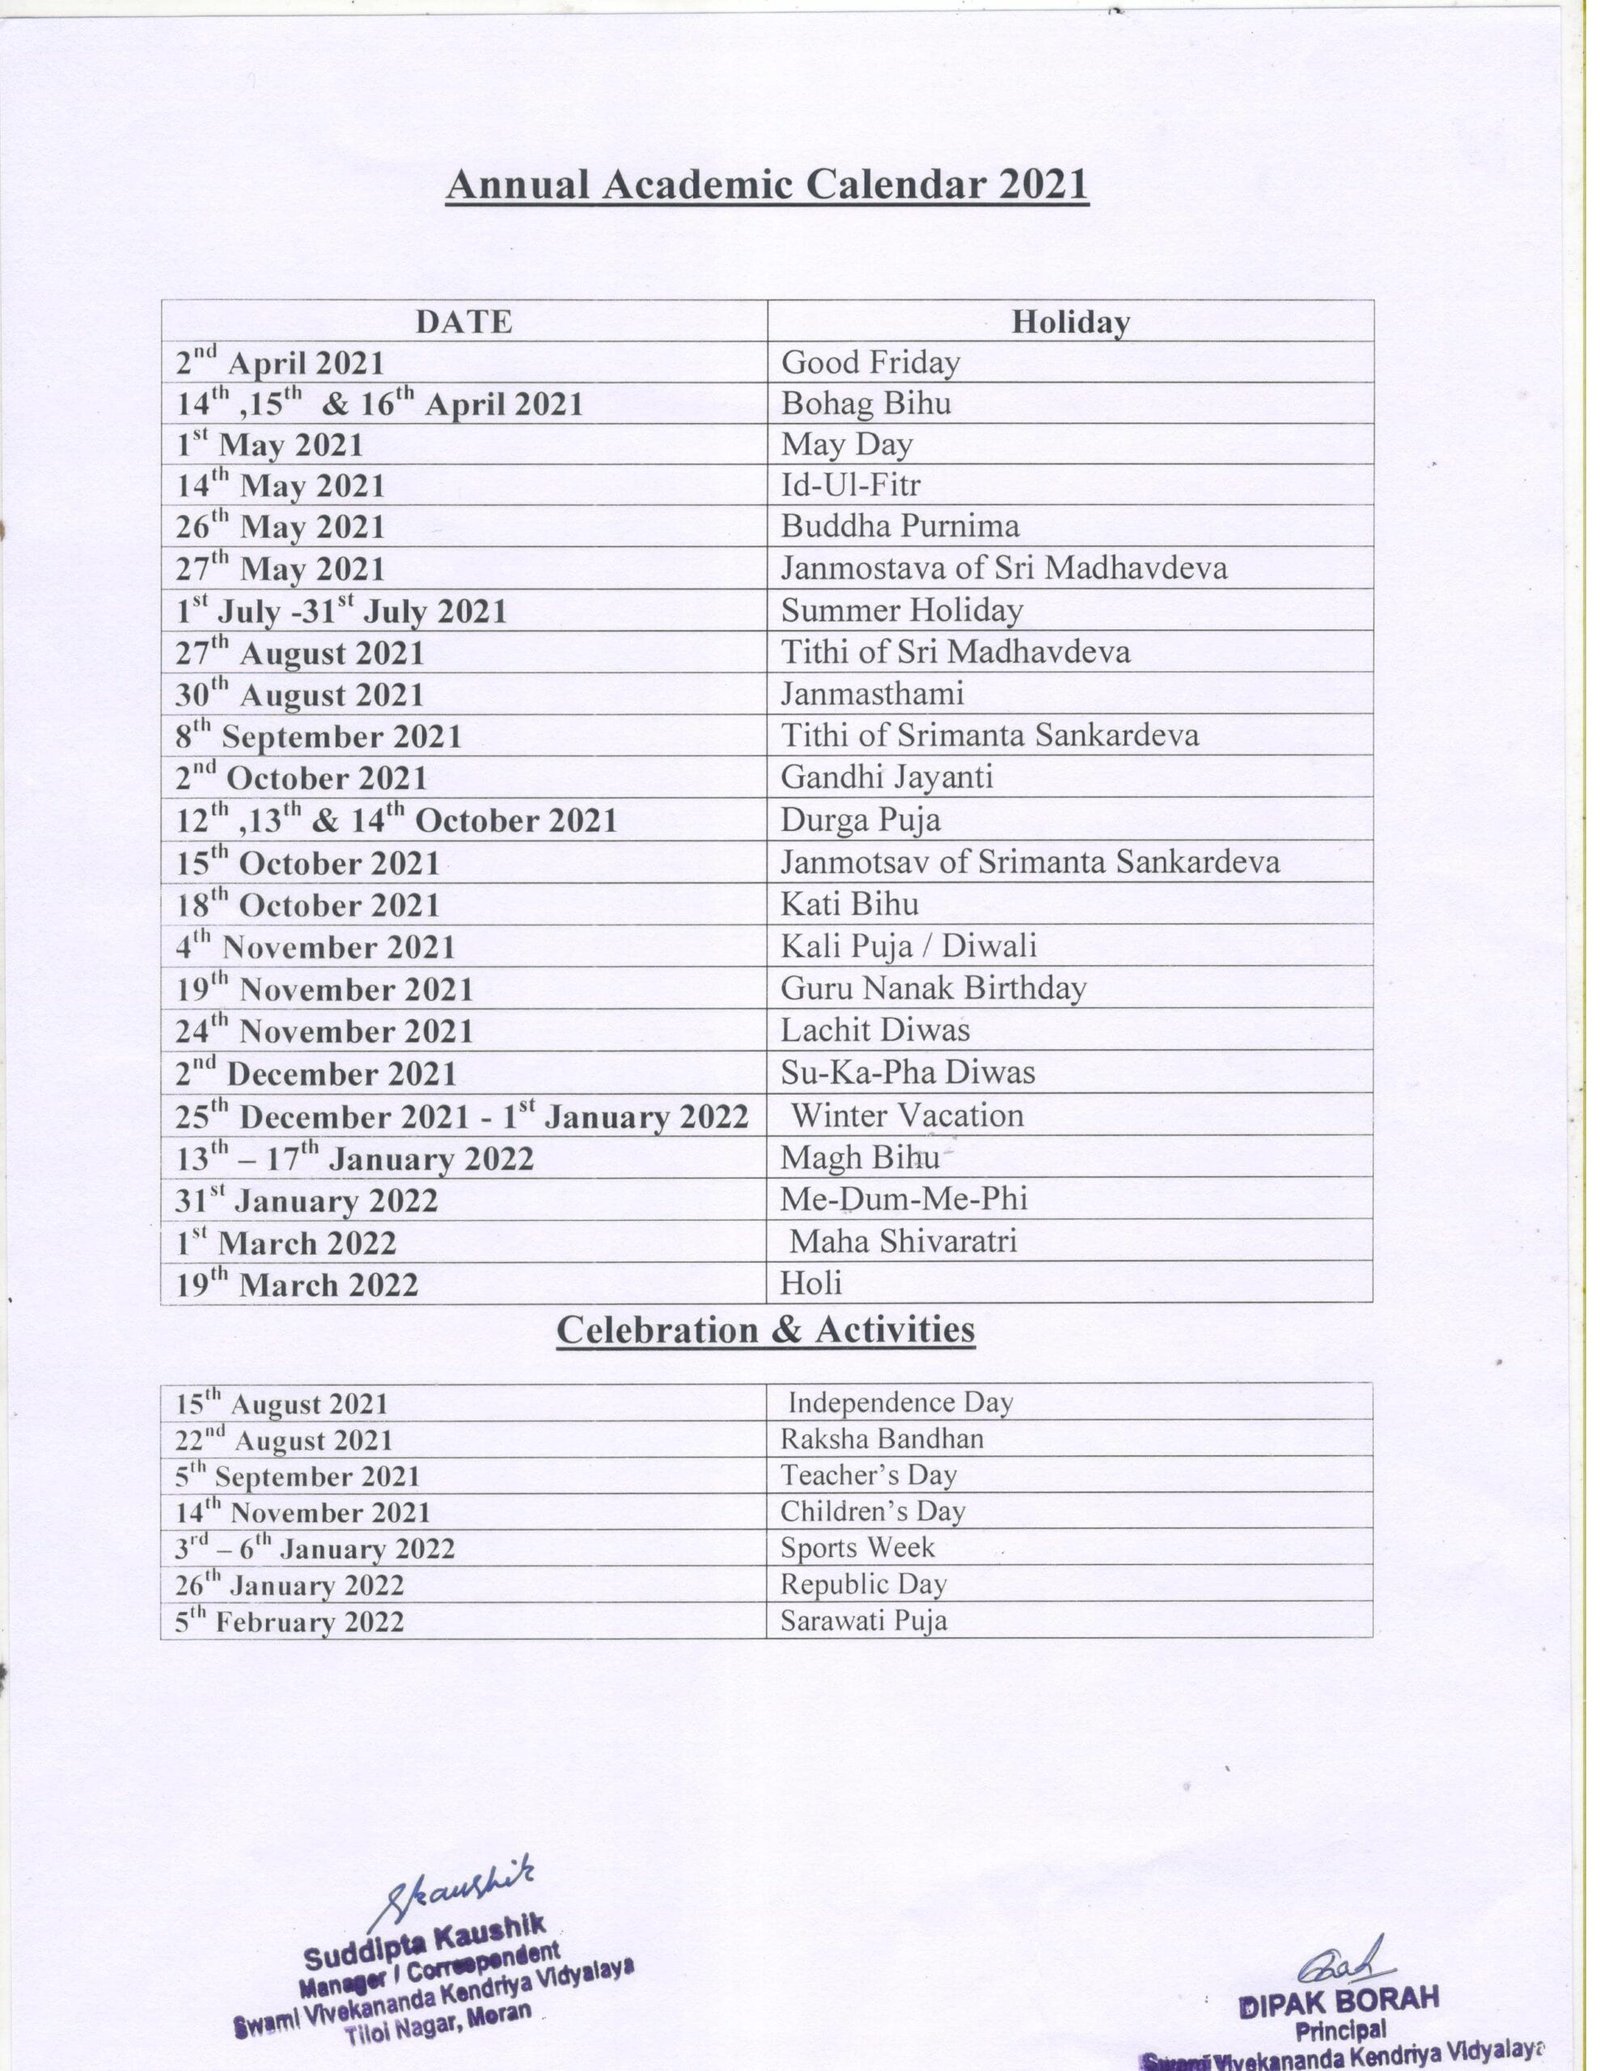 annual-academic-calendar-swami-vivekananda-kendriya-vidyalaya